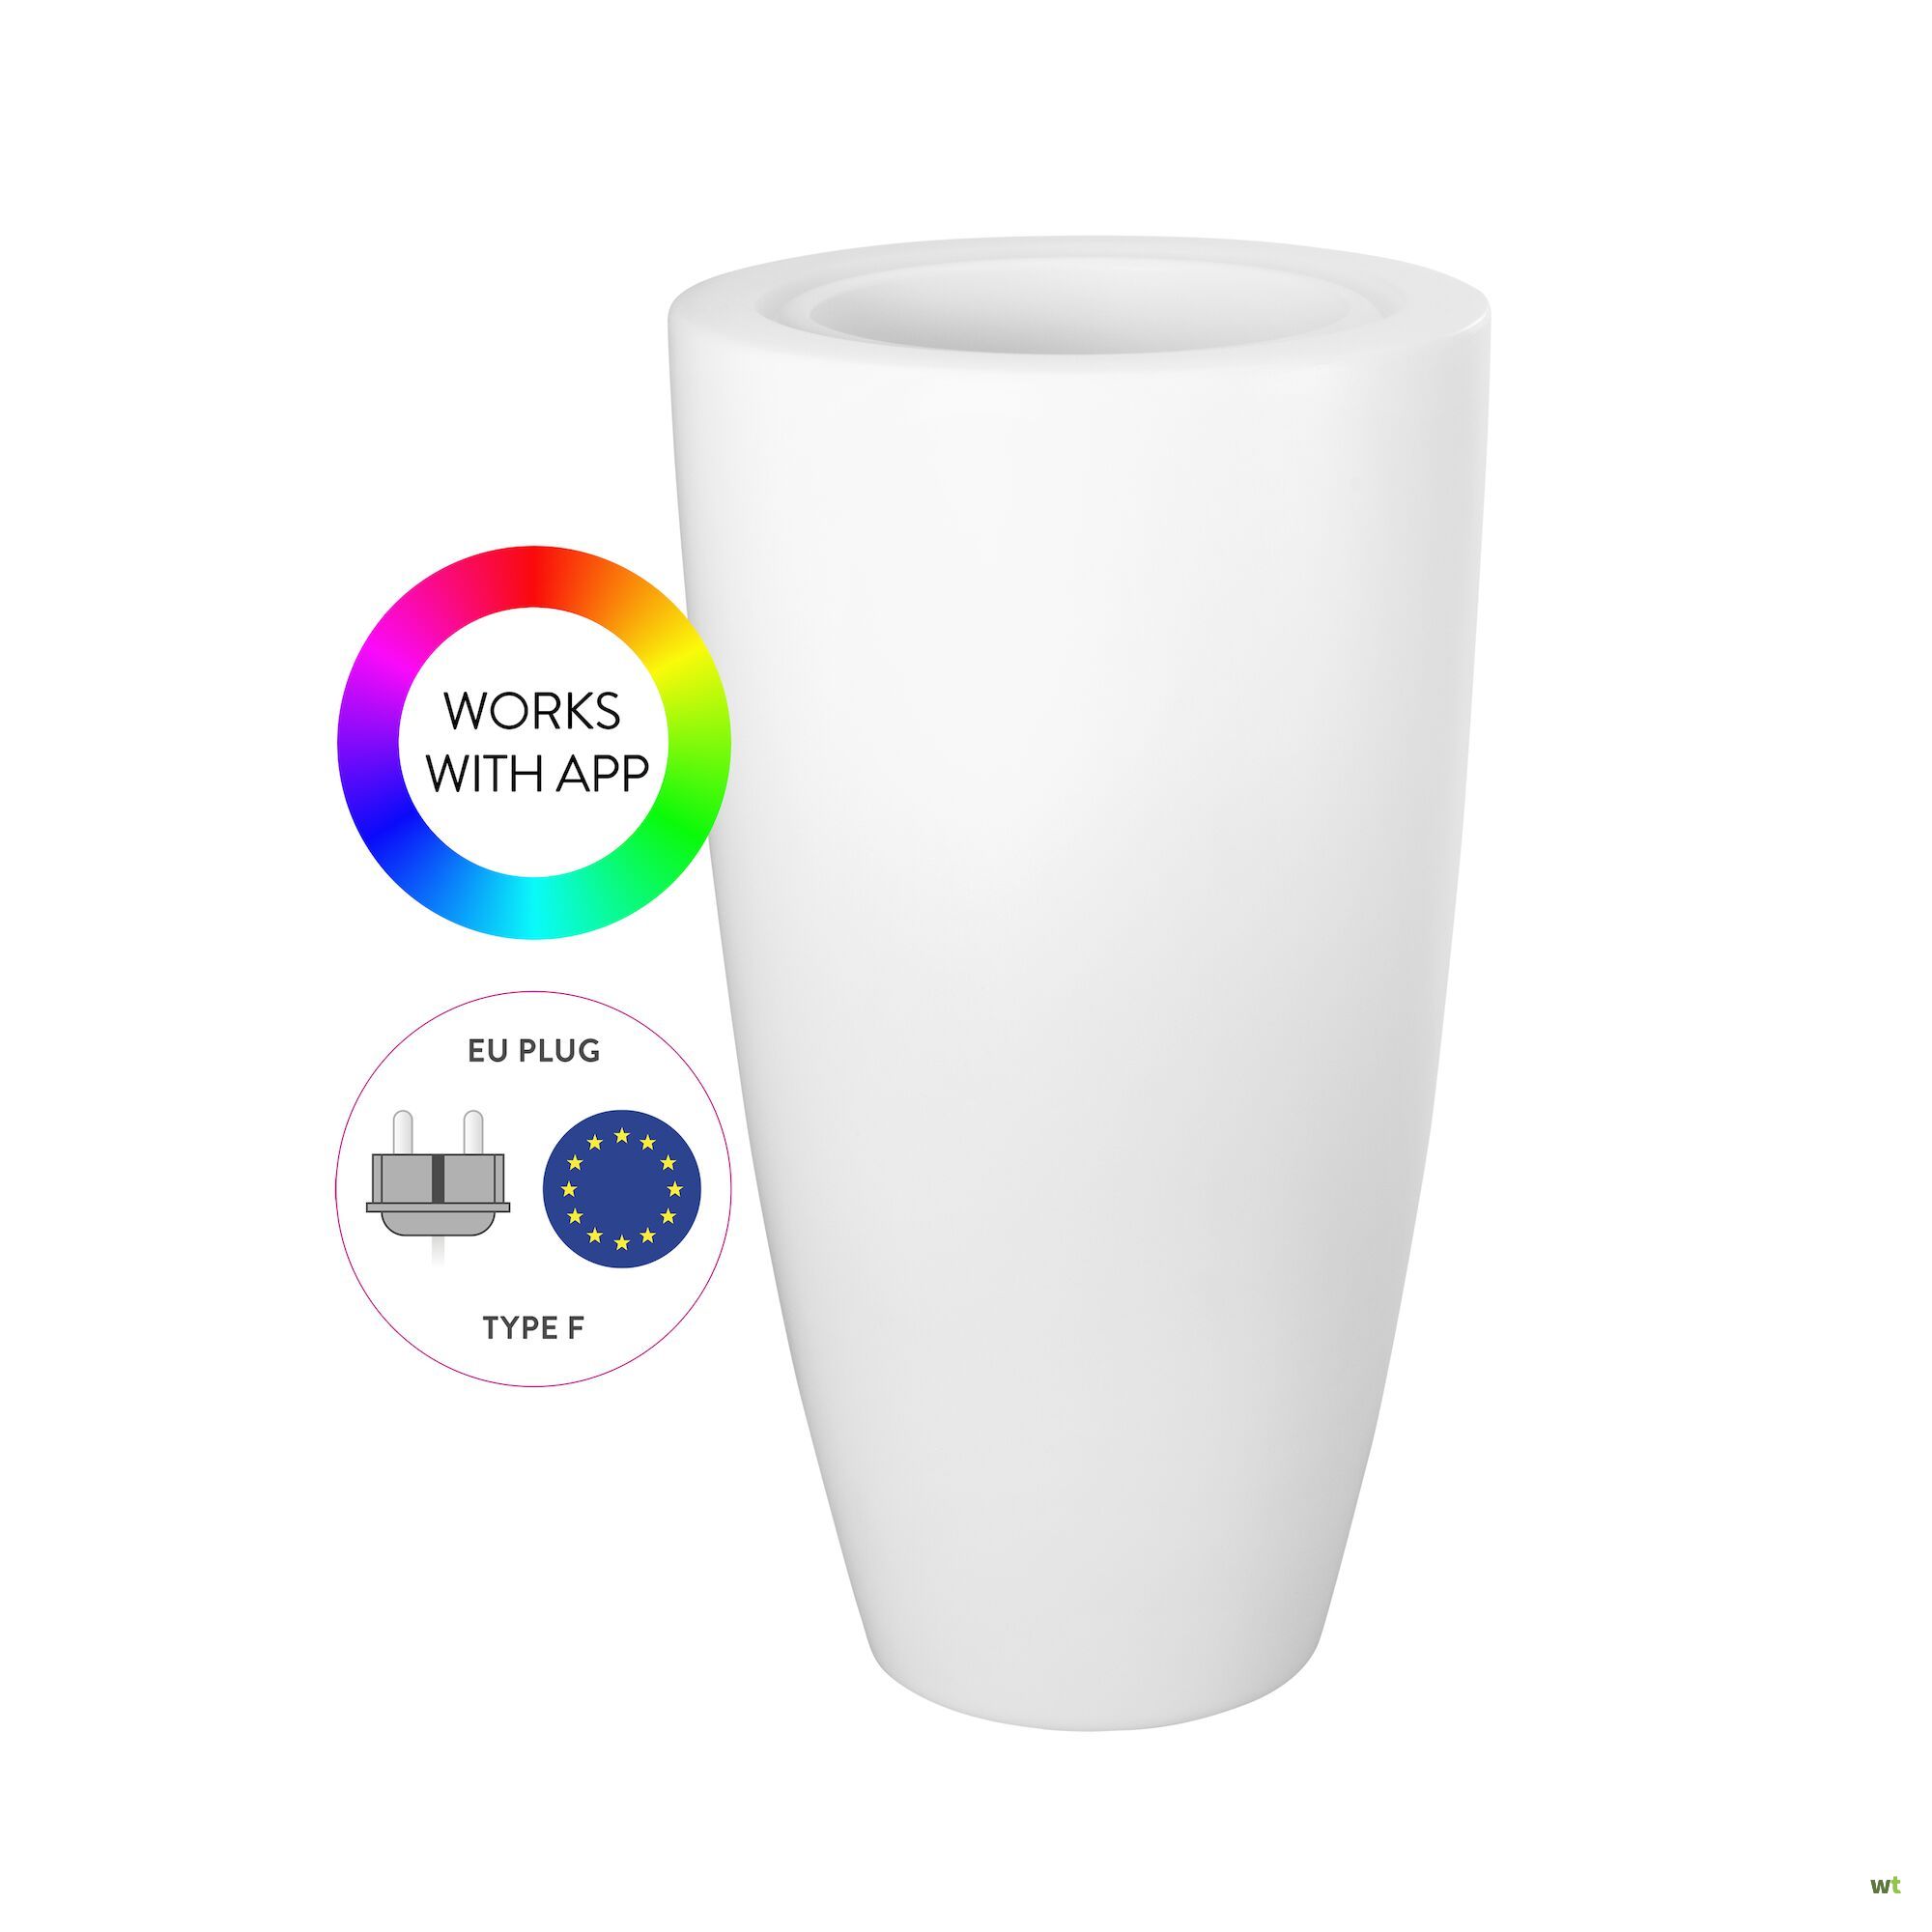 Buigen Kikker bedriegen Pure Soft Round High Smart LED 40 bloempot transparant elho